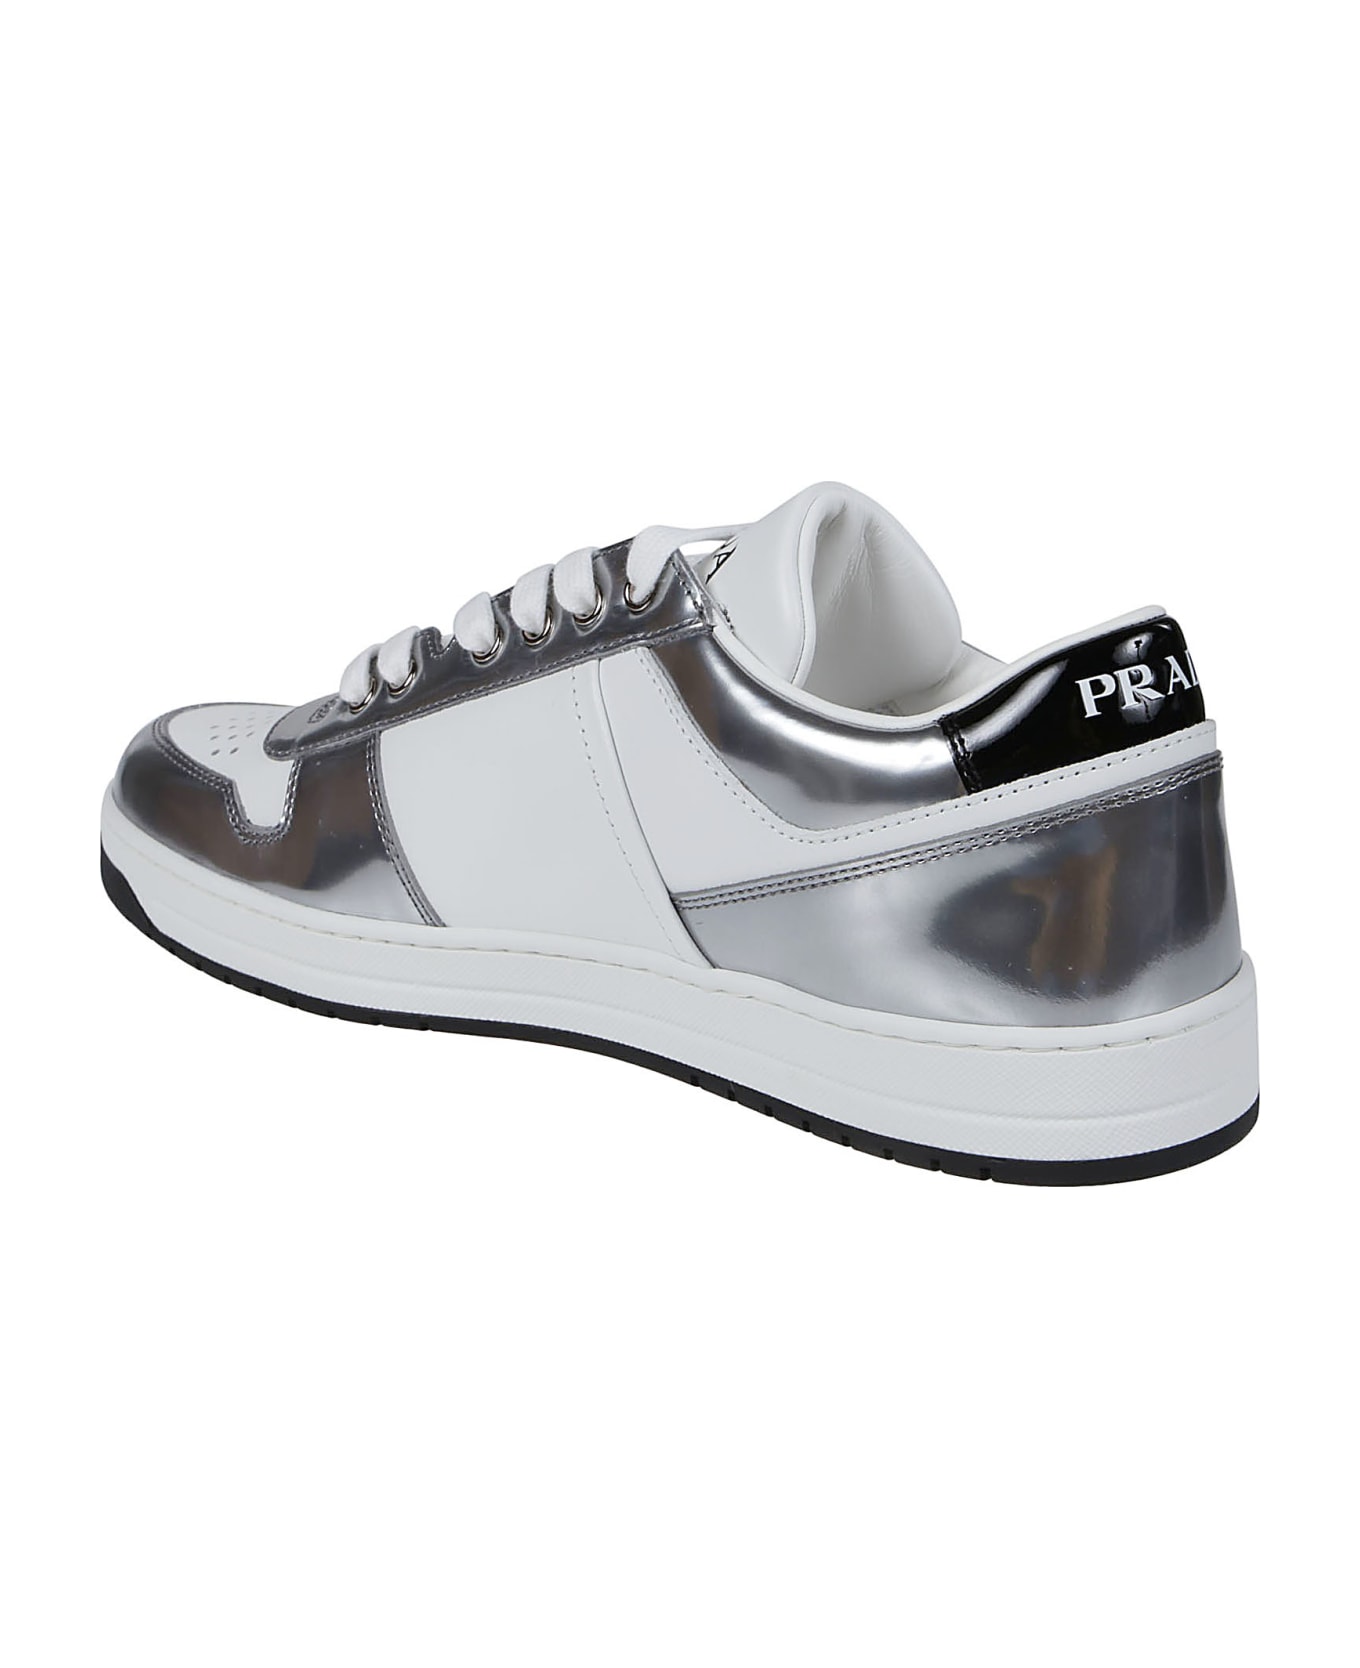 Prada Sneakers Downtown - Bianco/argento